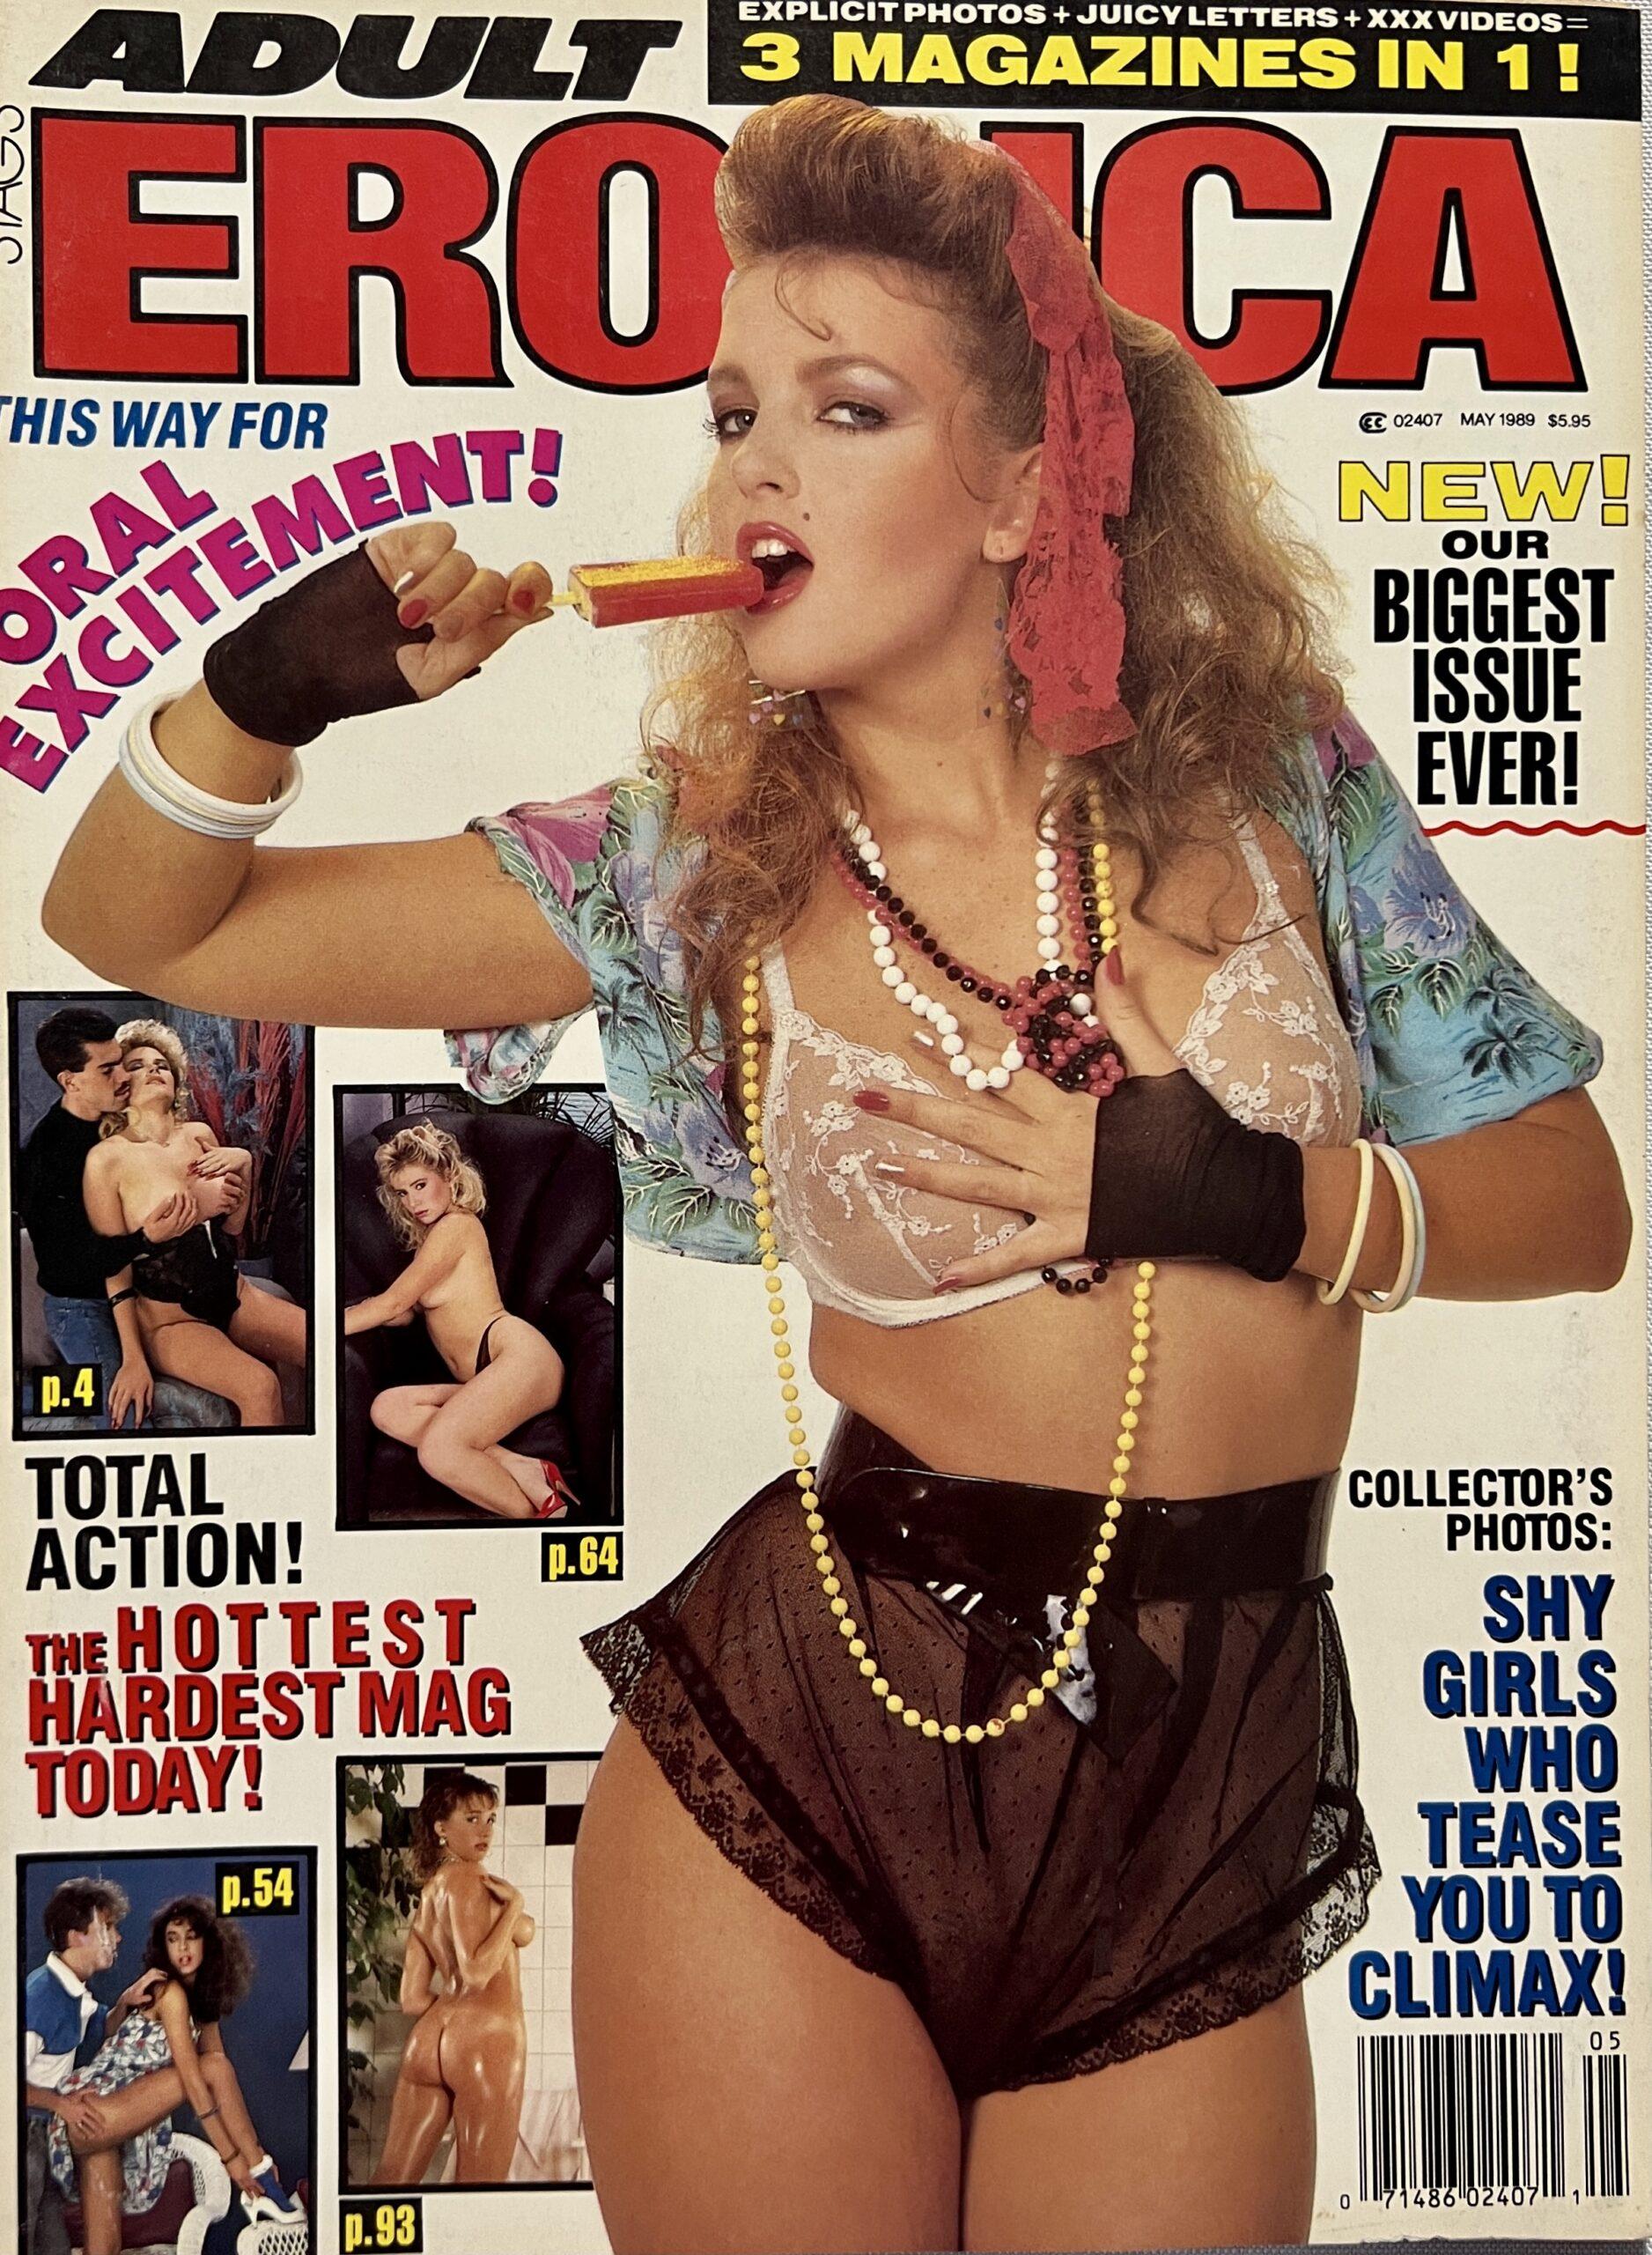 Vintage Porn Magazine Oral - Stag's Adult Erotica May 1989 Adult Magazine - Vintage Magazines 16